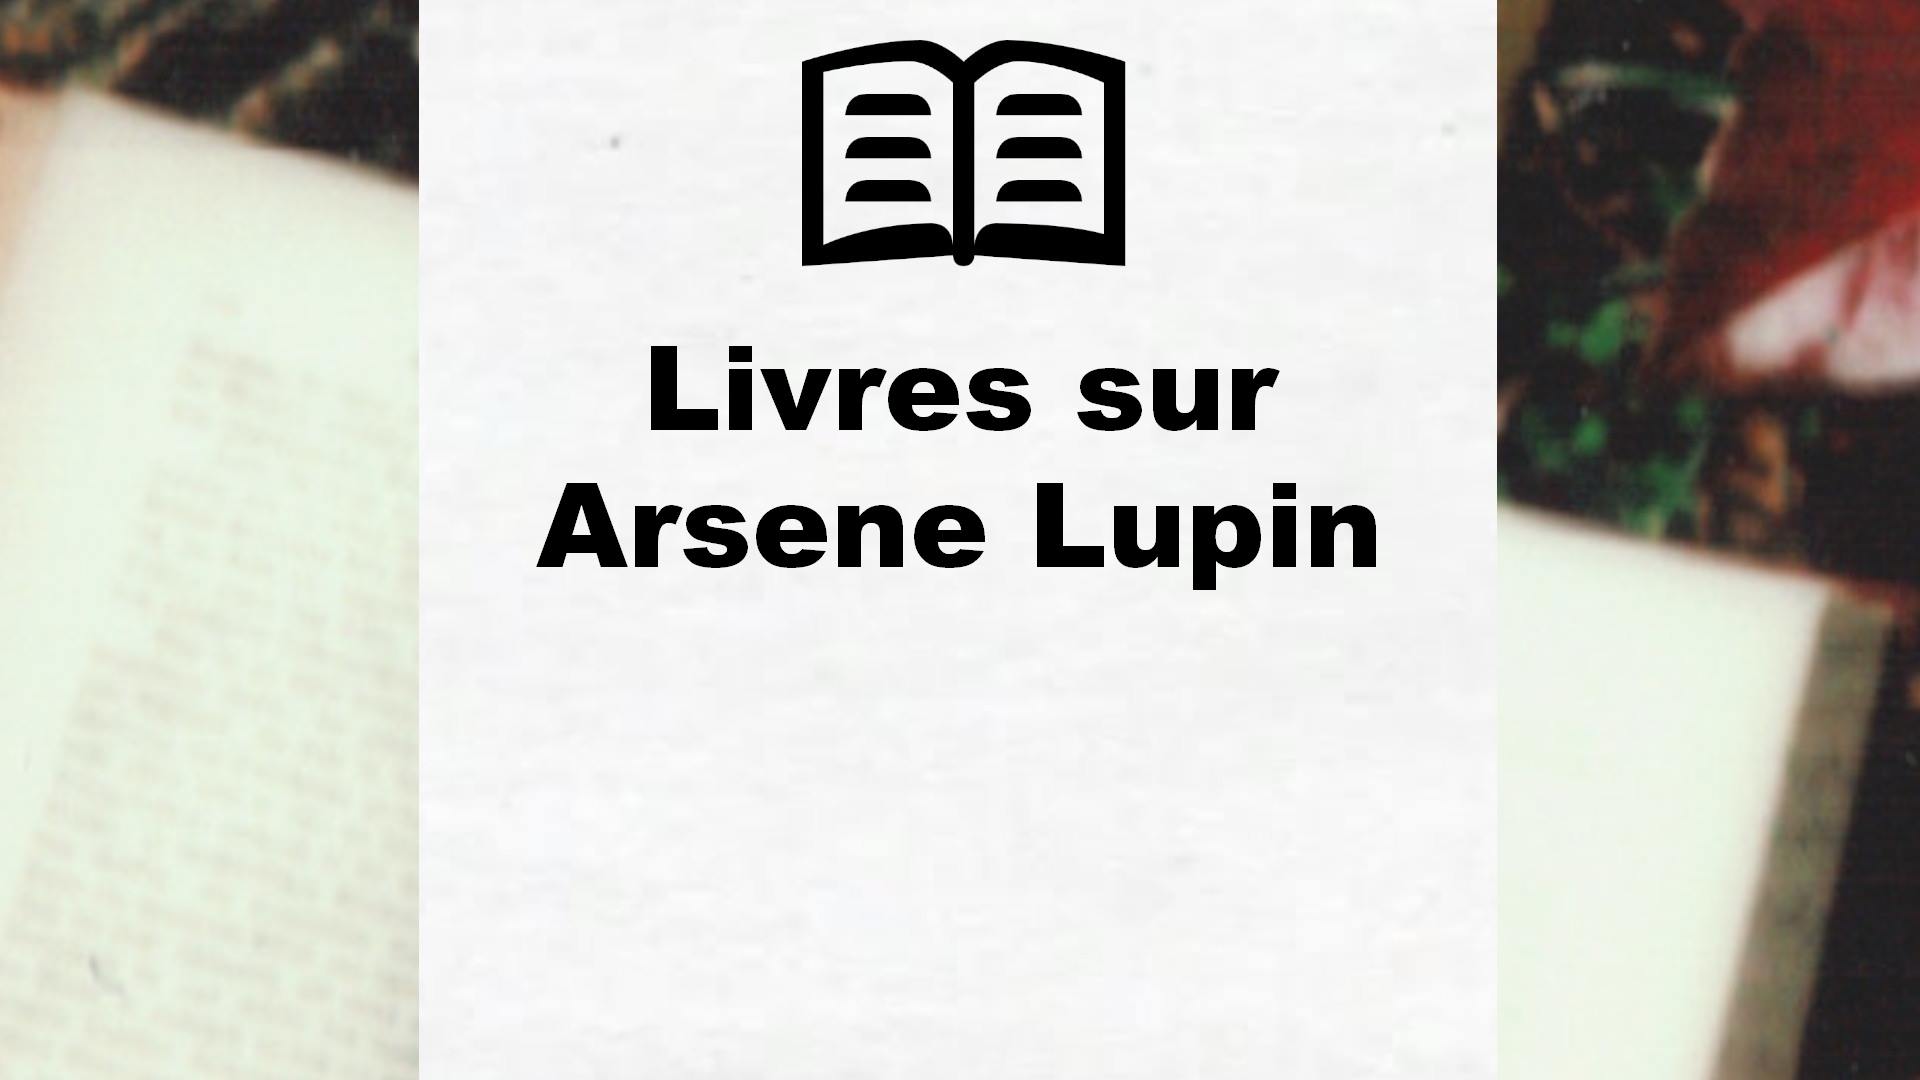 Livres sur Arsene Lupin